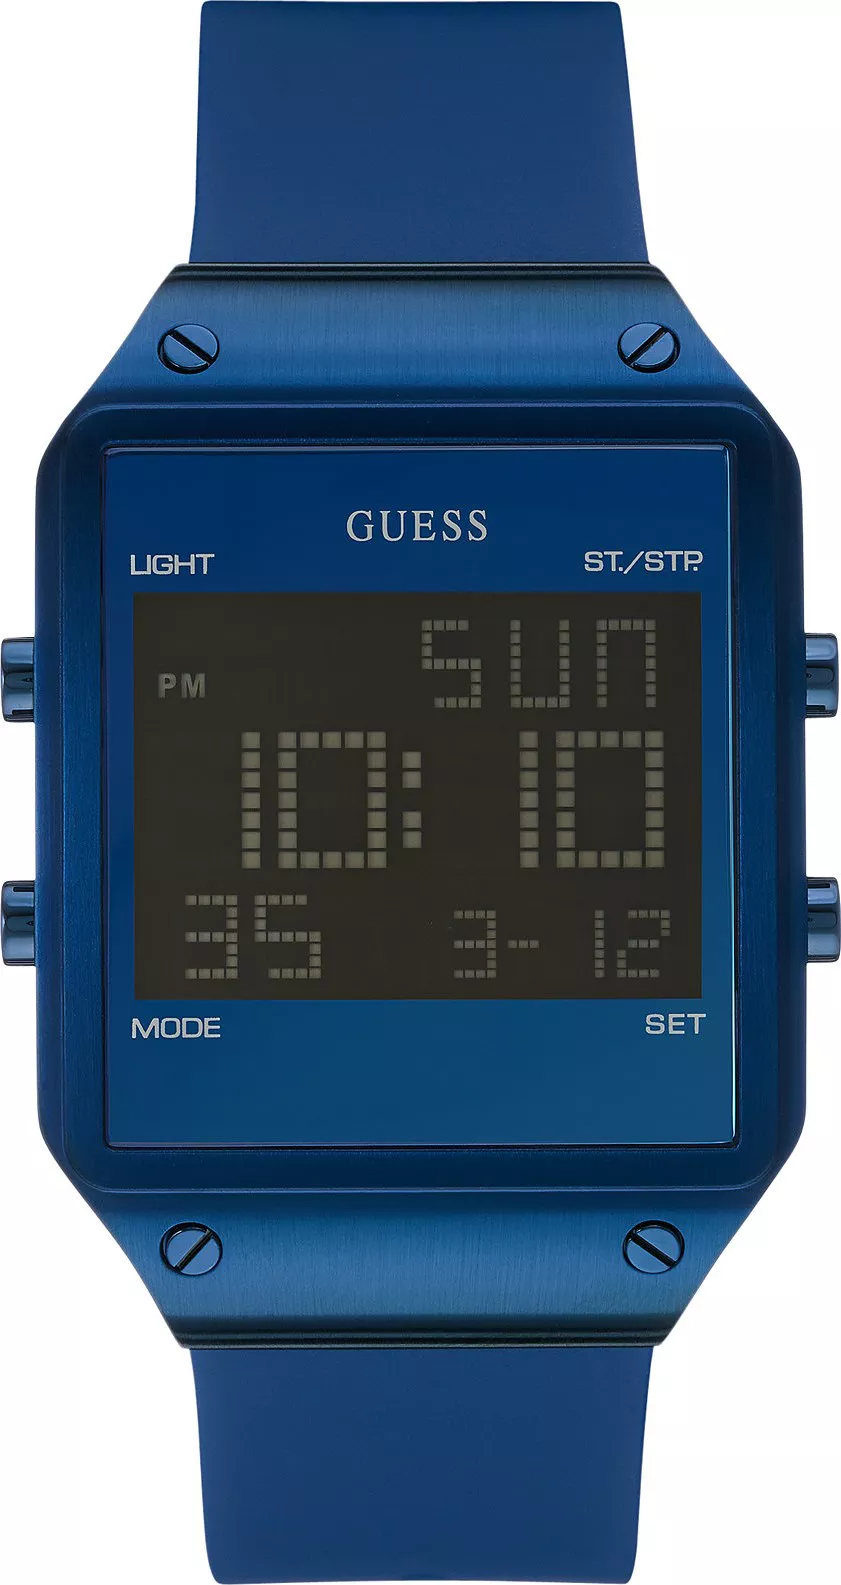 MSP: 65441 GUESS Digital Alarm Chronograph Watch Men's 55mm 4,778,000